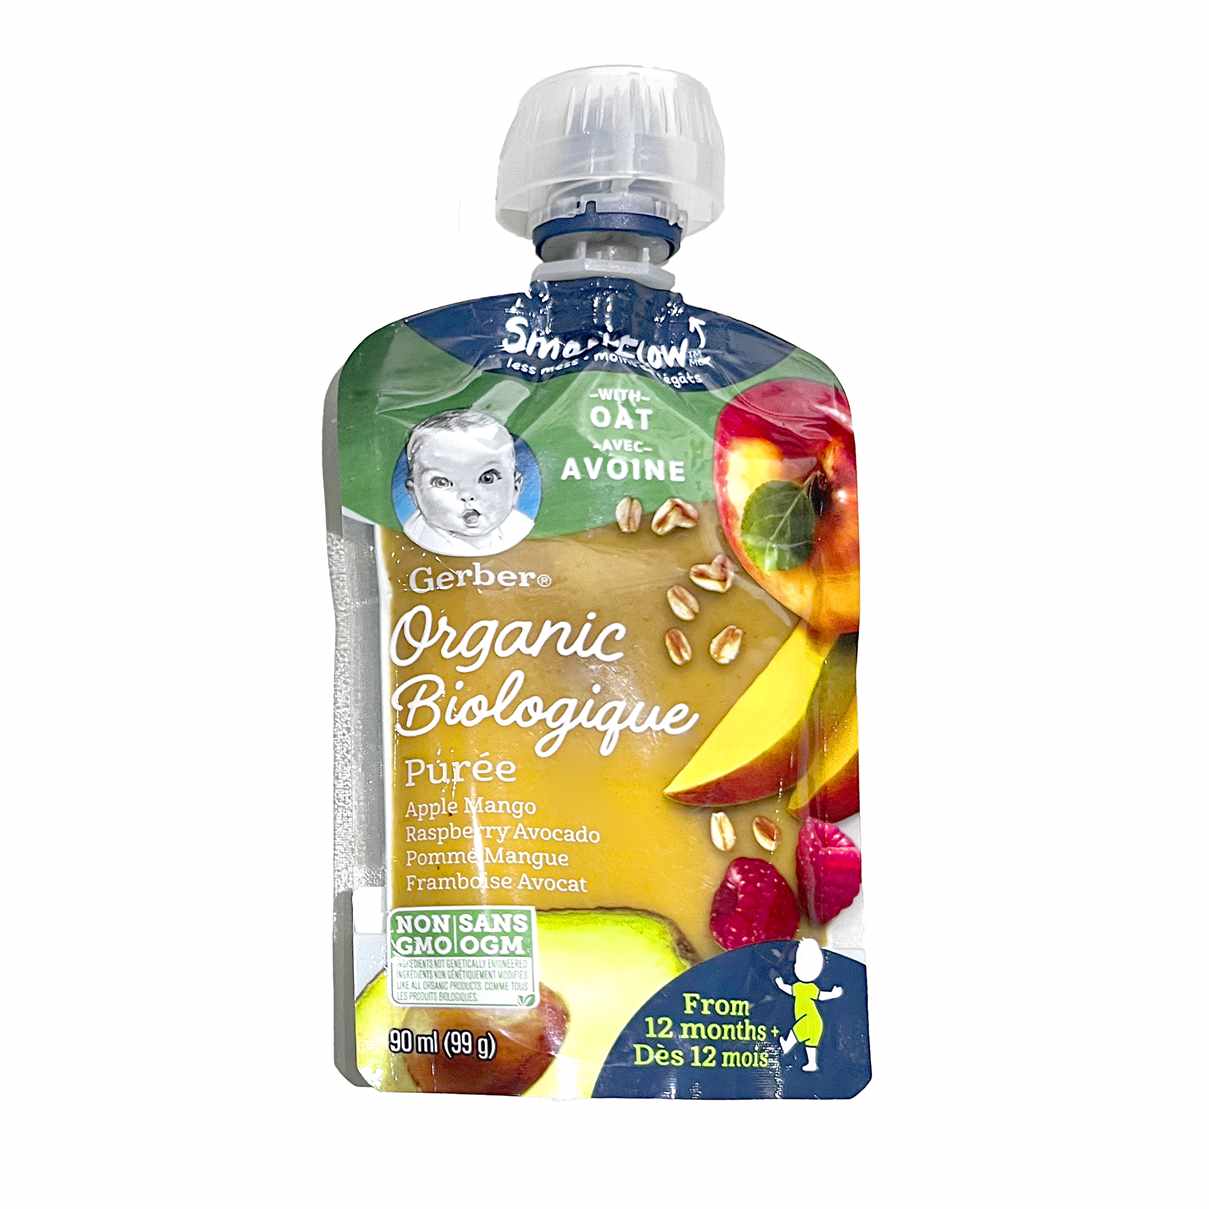 GERBER Organic Purée, Apple Blueberries Spinach, Baby Food, 128 ml, 128 ML  